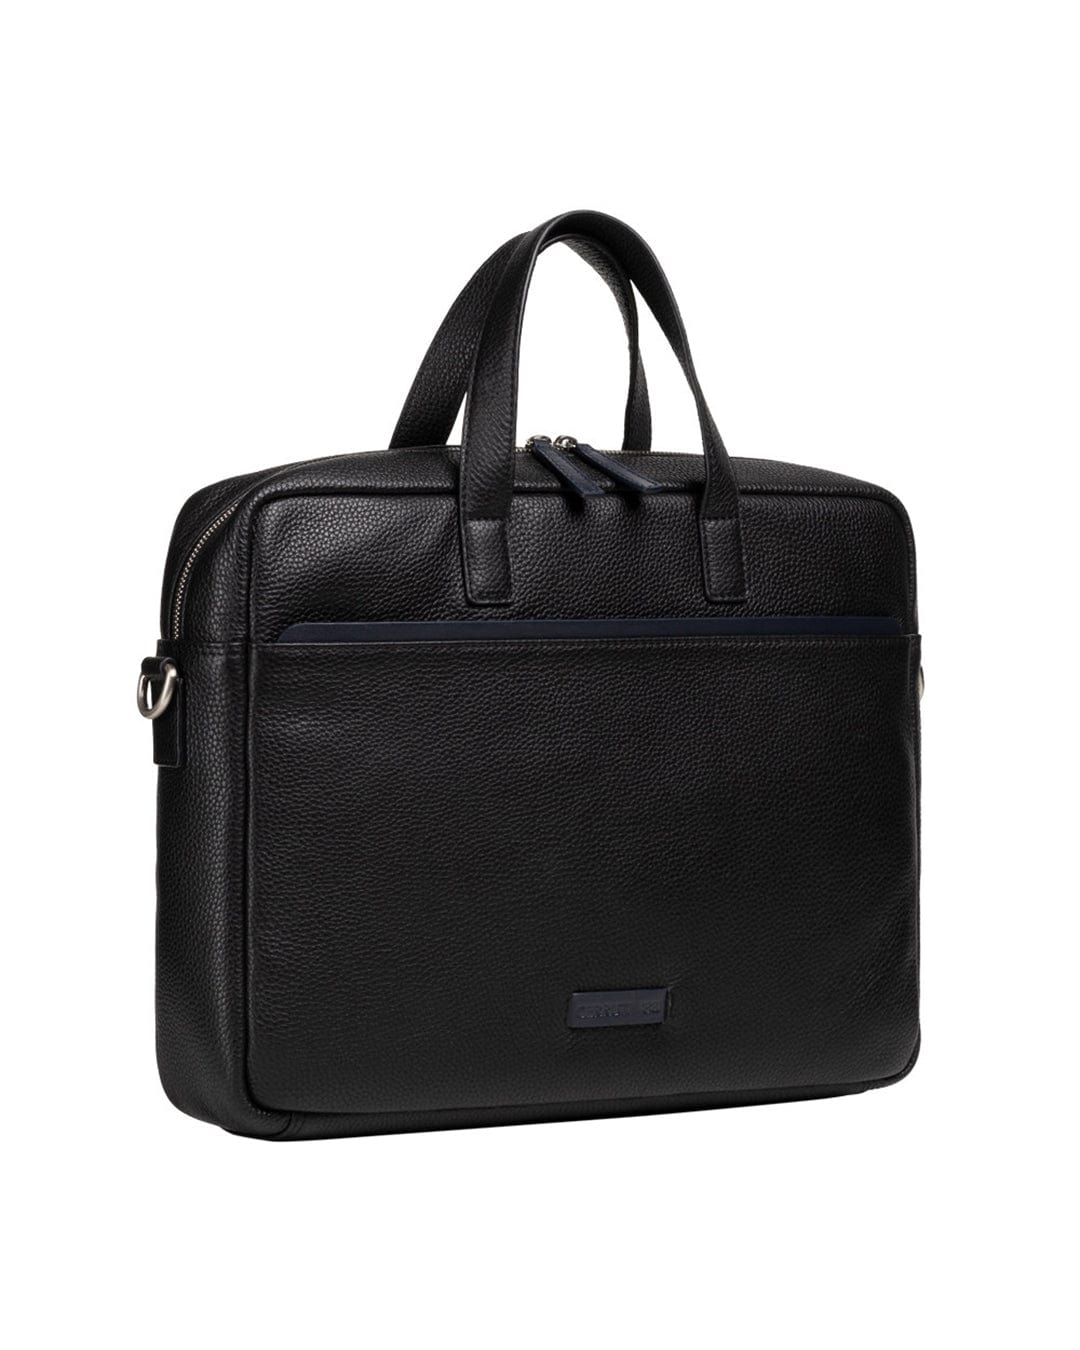 Cerruti Bags ONE SIZE Cerruti I88I Black Leather Jacob Briefcase